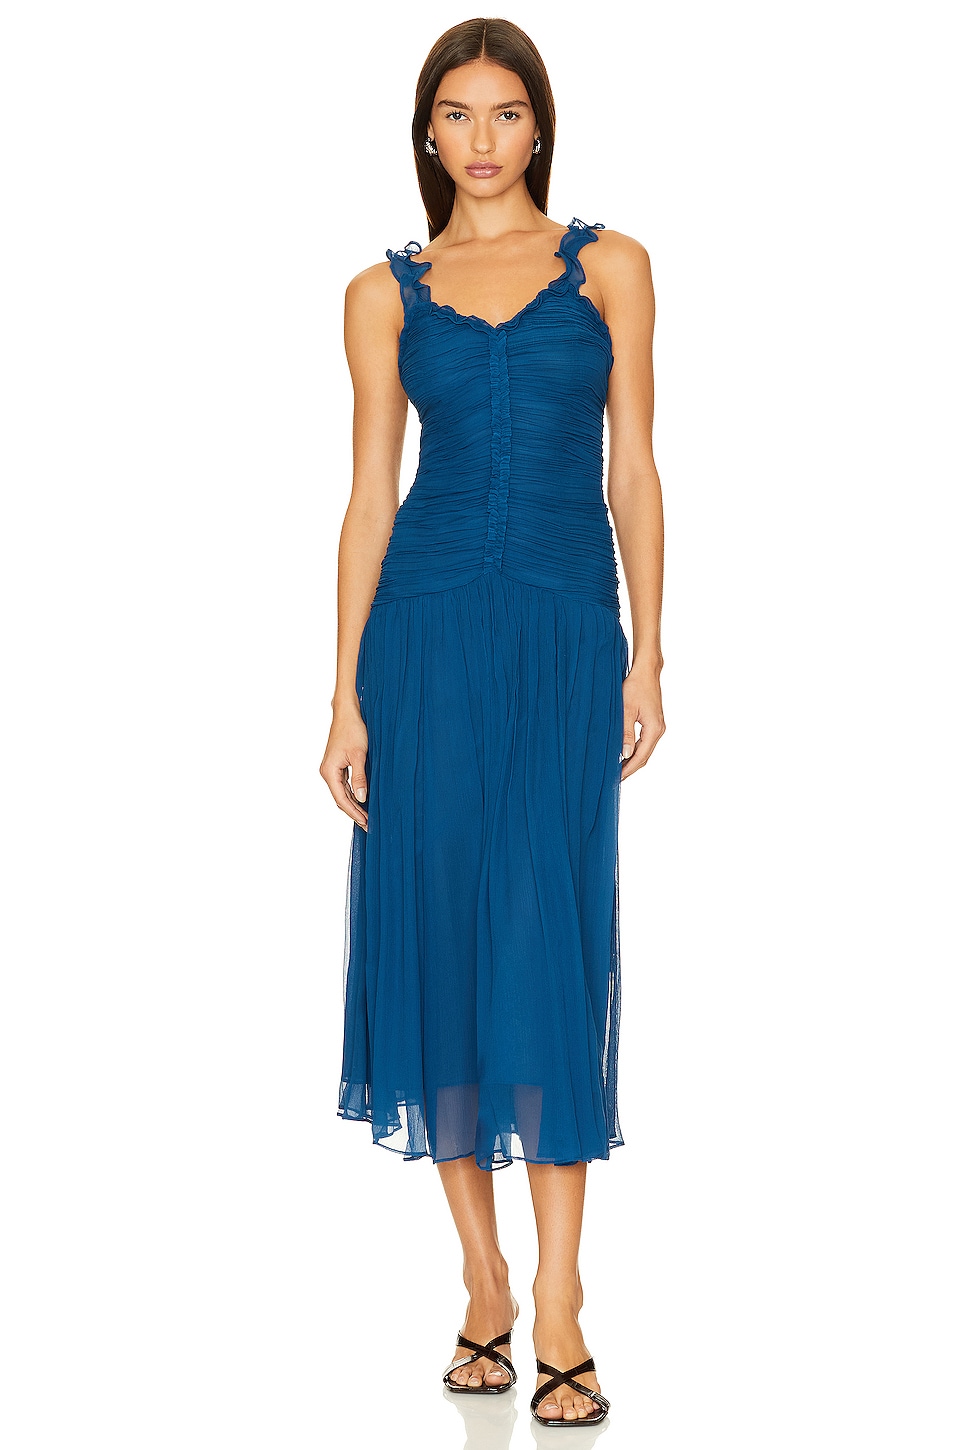 Ulla Johnson Rosaria Dress in Sapphire | REVOLVE